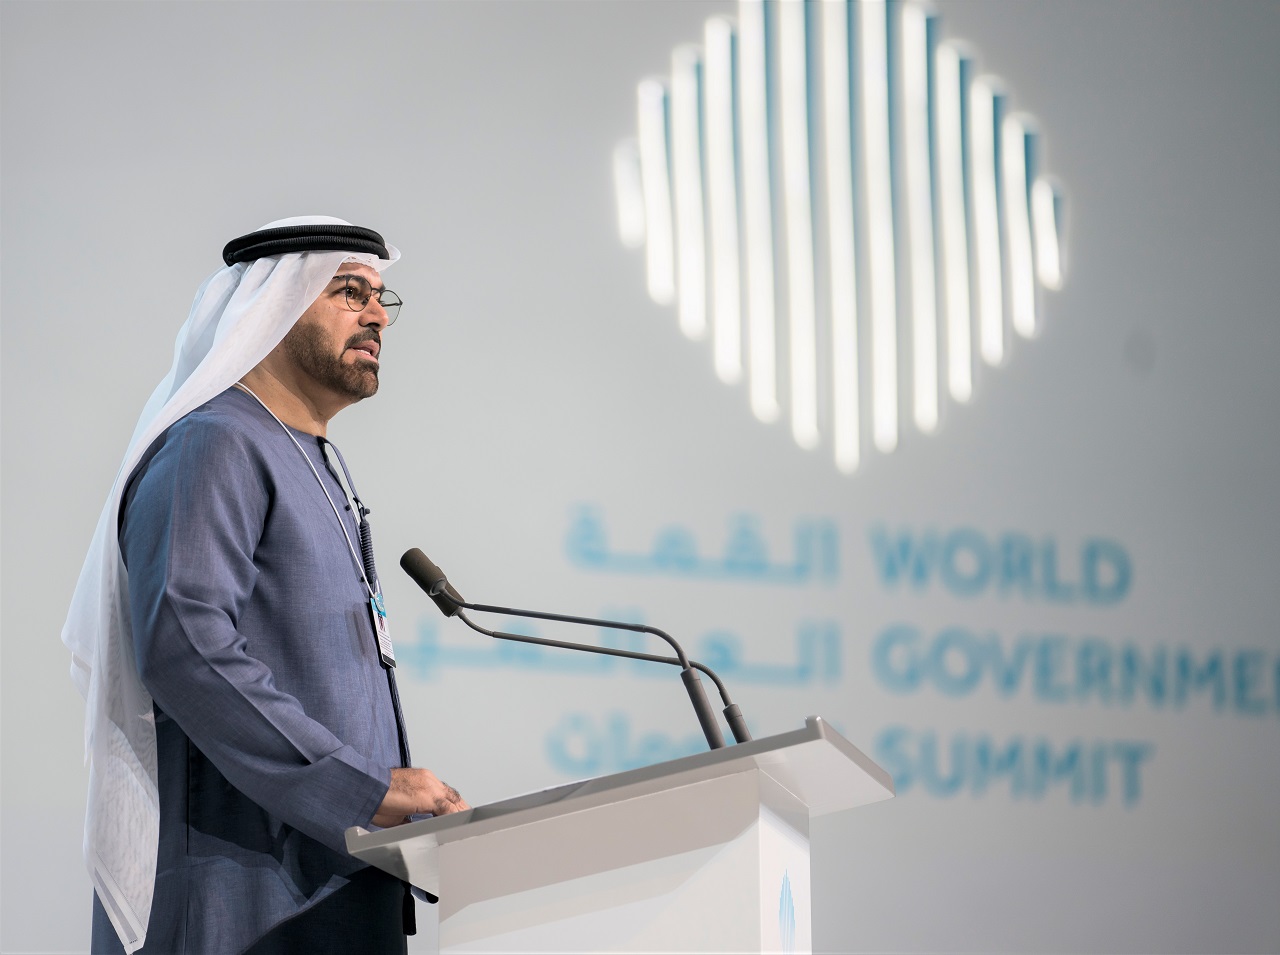 Dubai's World Government Summit set to shape next global agenda